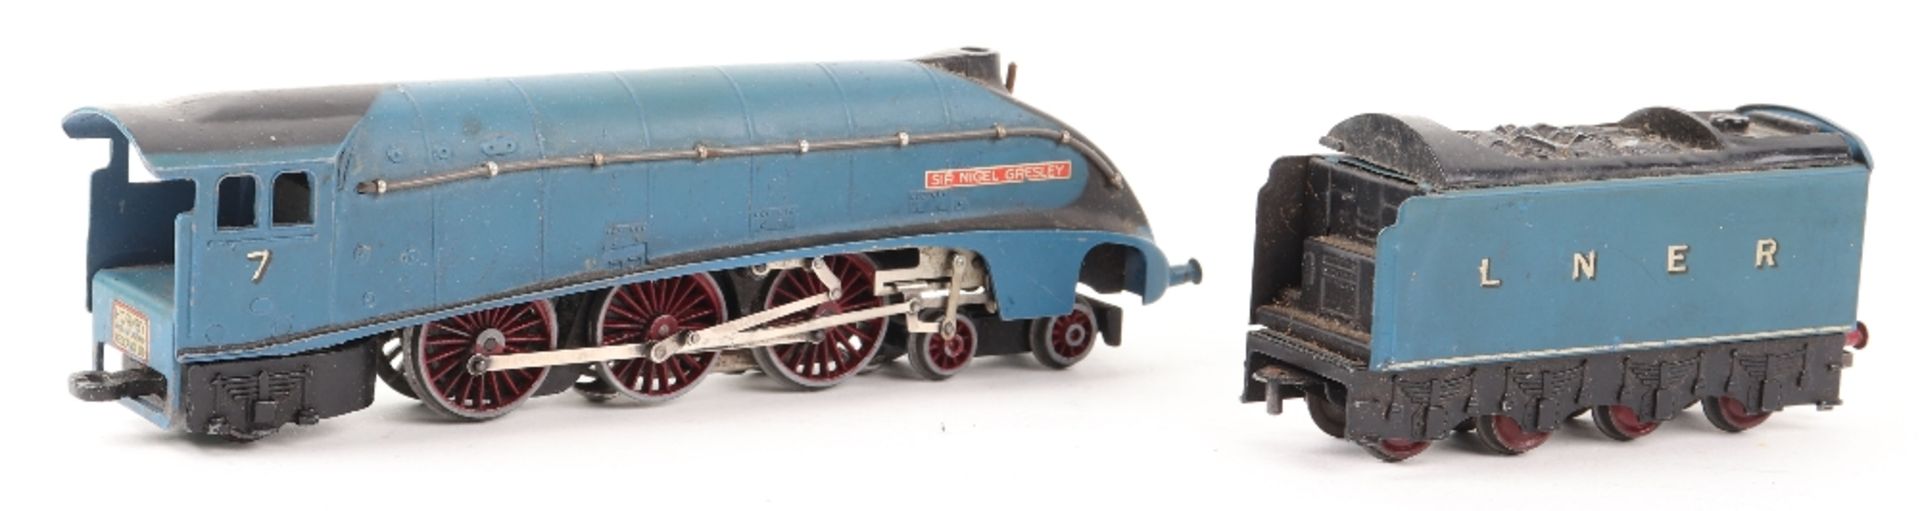 Hornby Dublo 3-rail EDL1 Sir Nigel Gresley locomotive and tender - Image 4 of 9